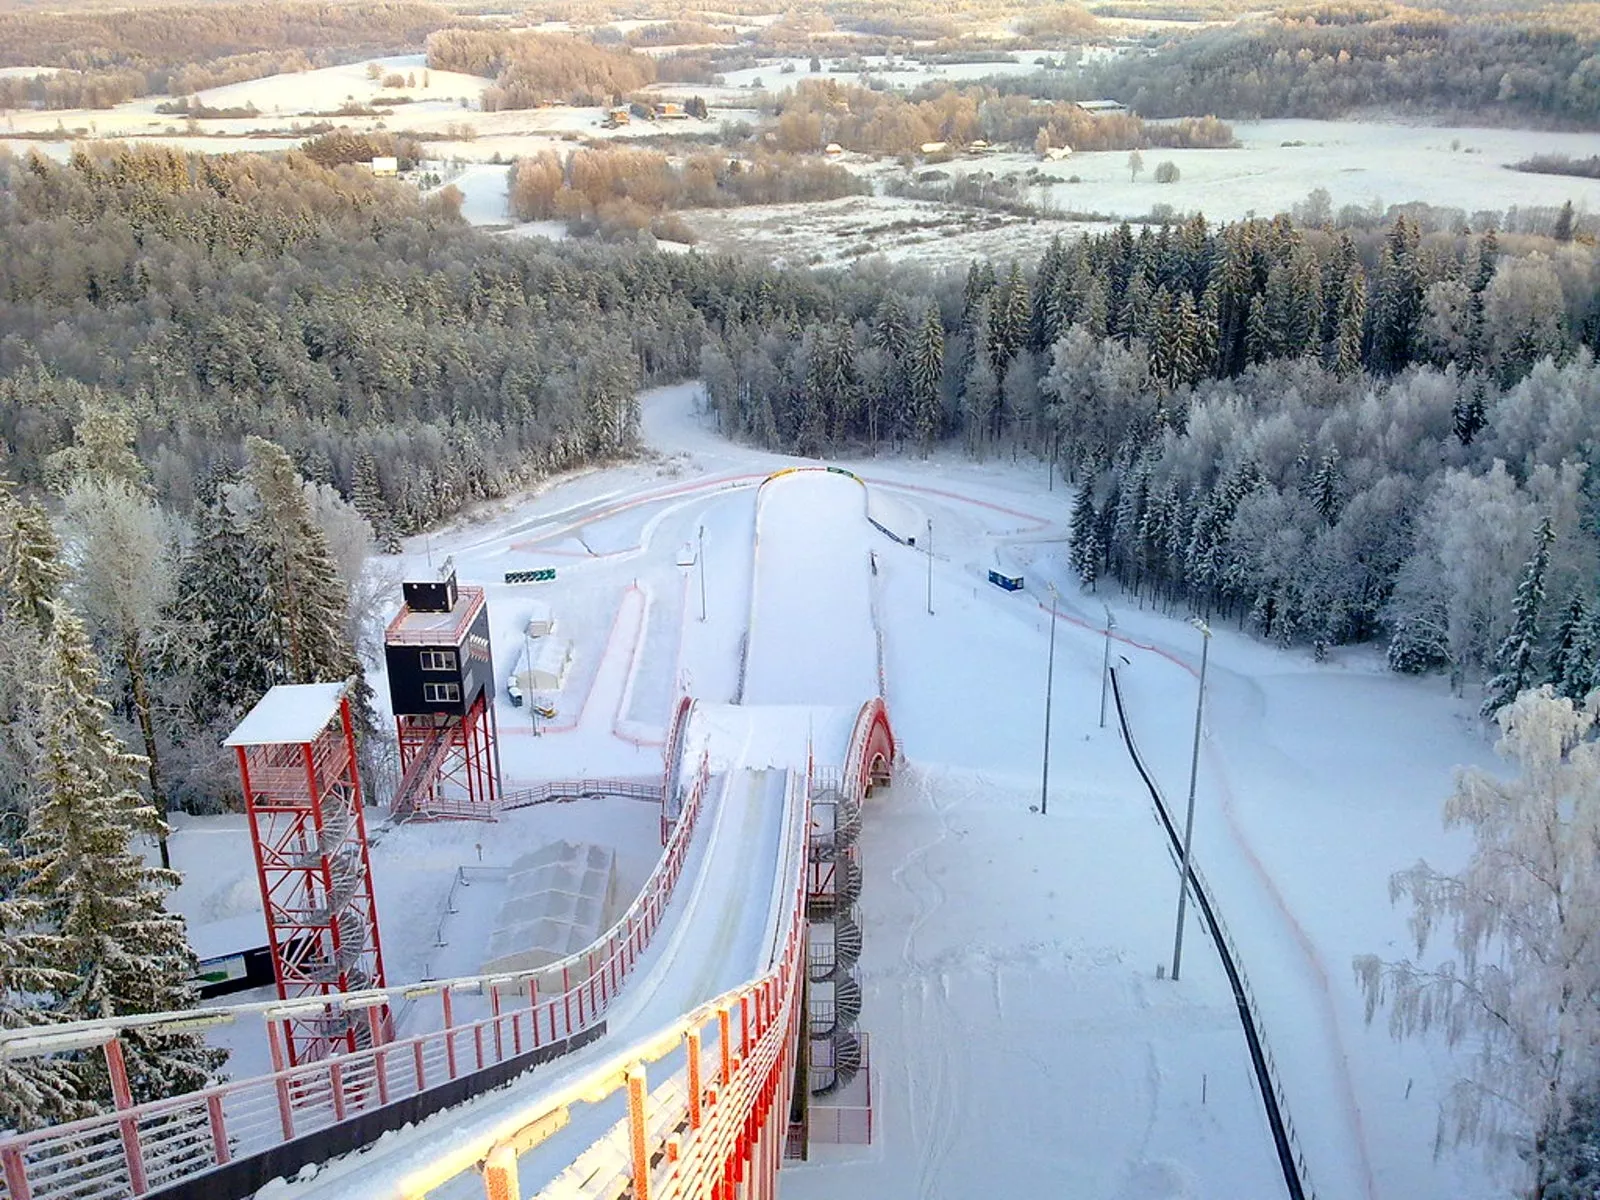 Small Munamagi Ski Center in Estonia, Europe | Snowboarding,Skiing - Rated 3.7